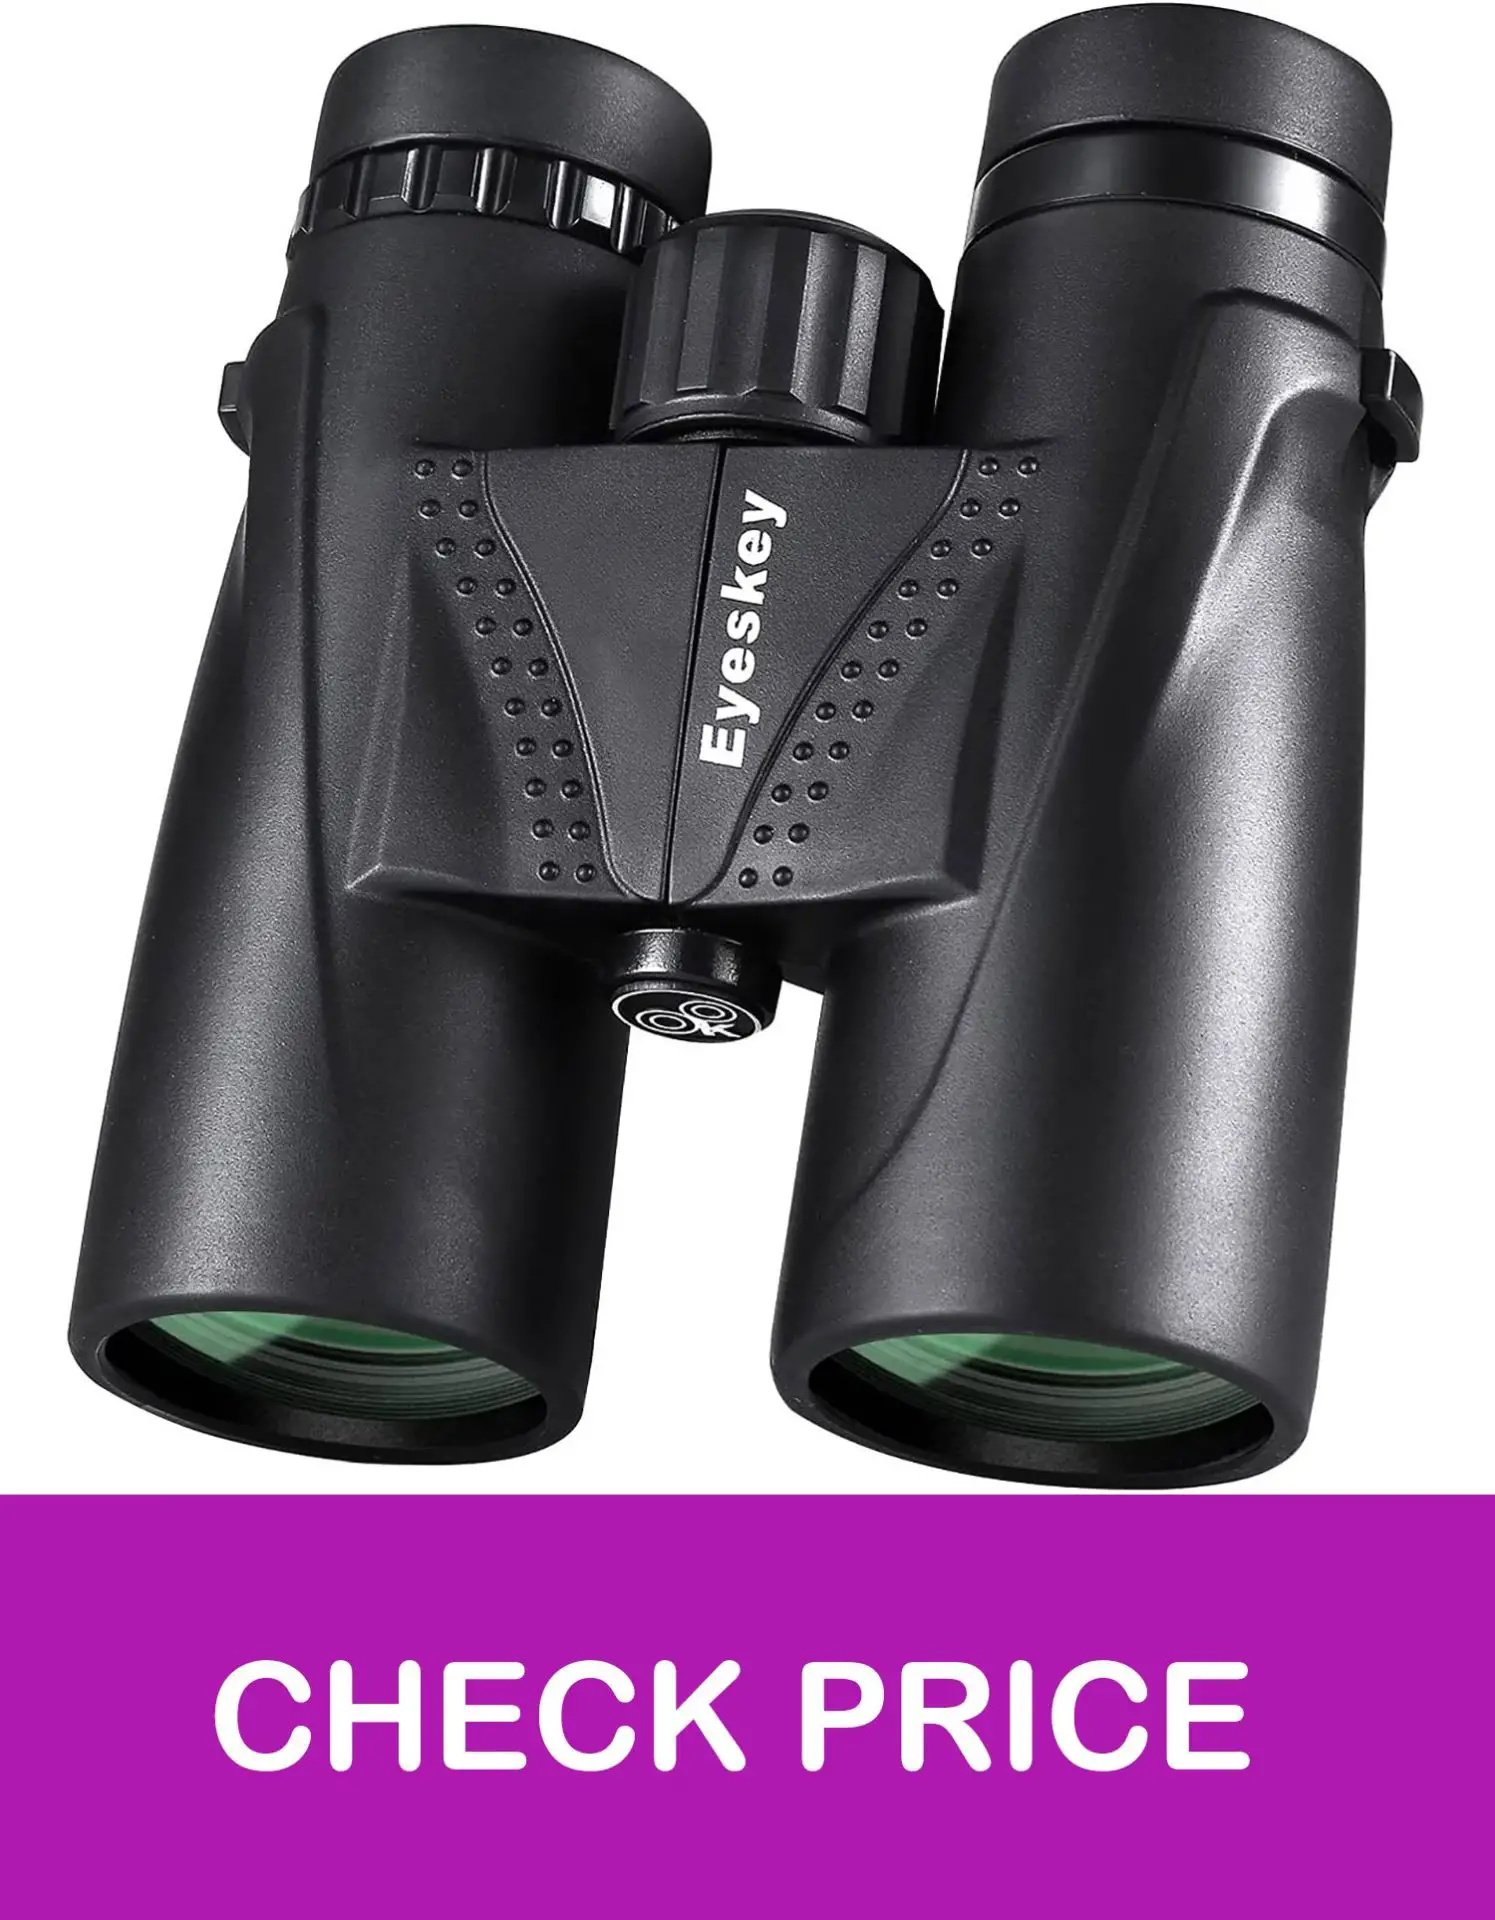 Eyeskey "Classic" HD 10x42 Binoculars